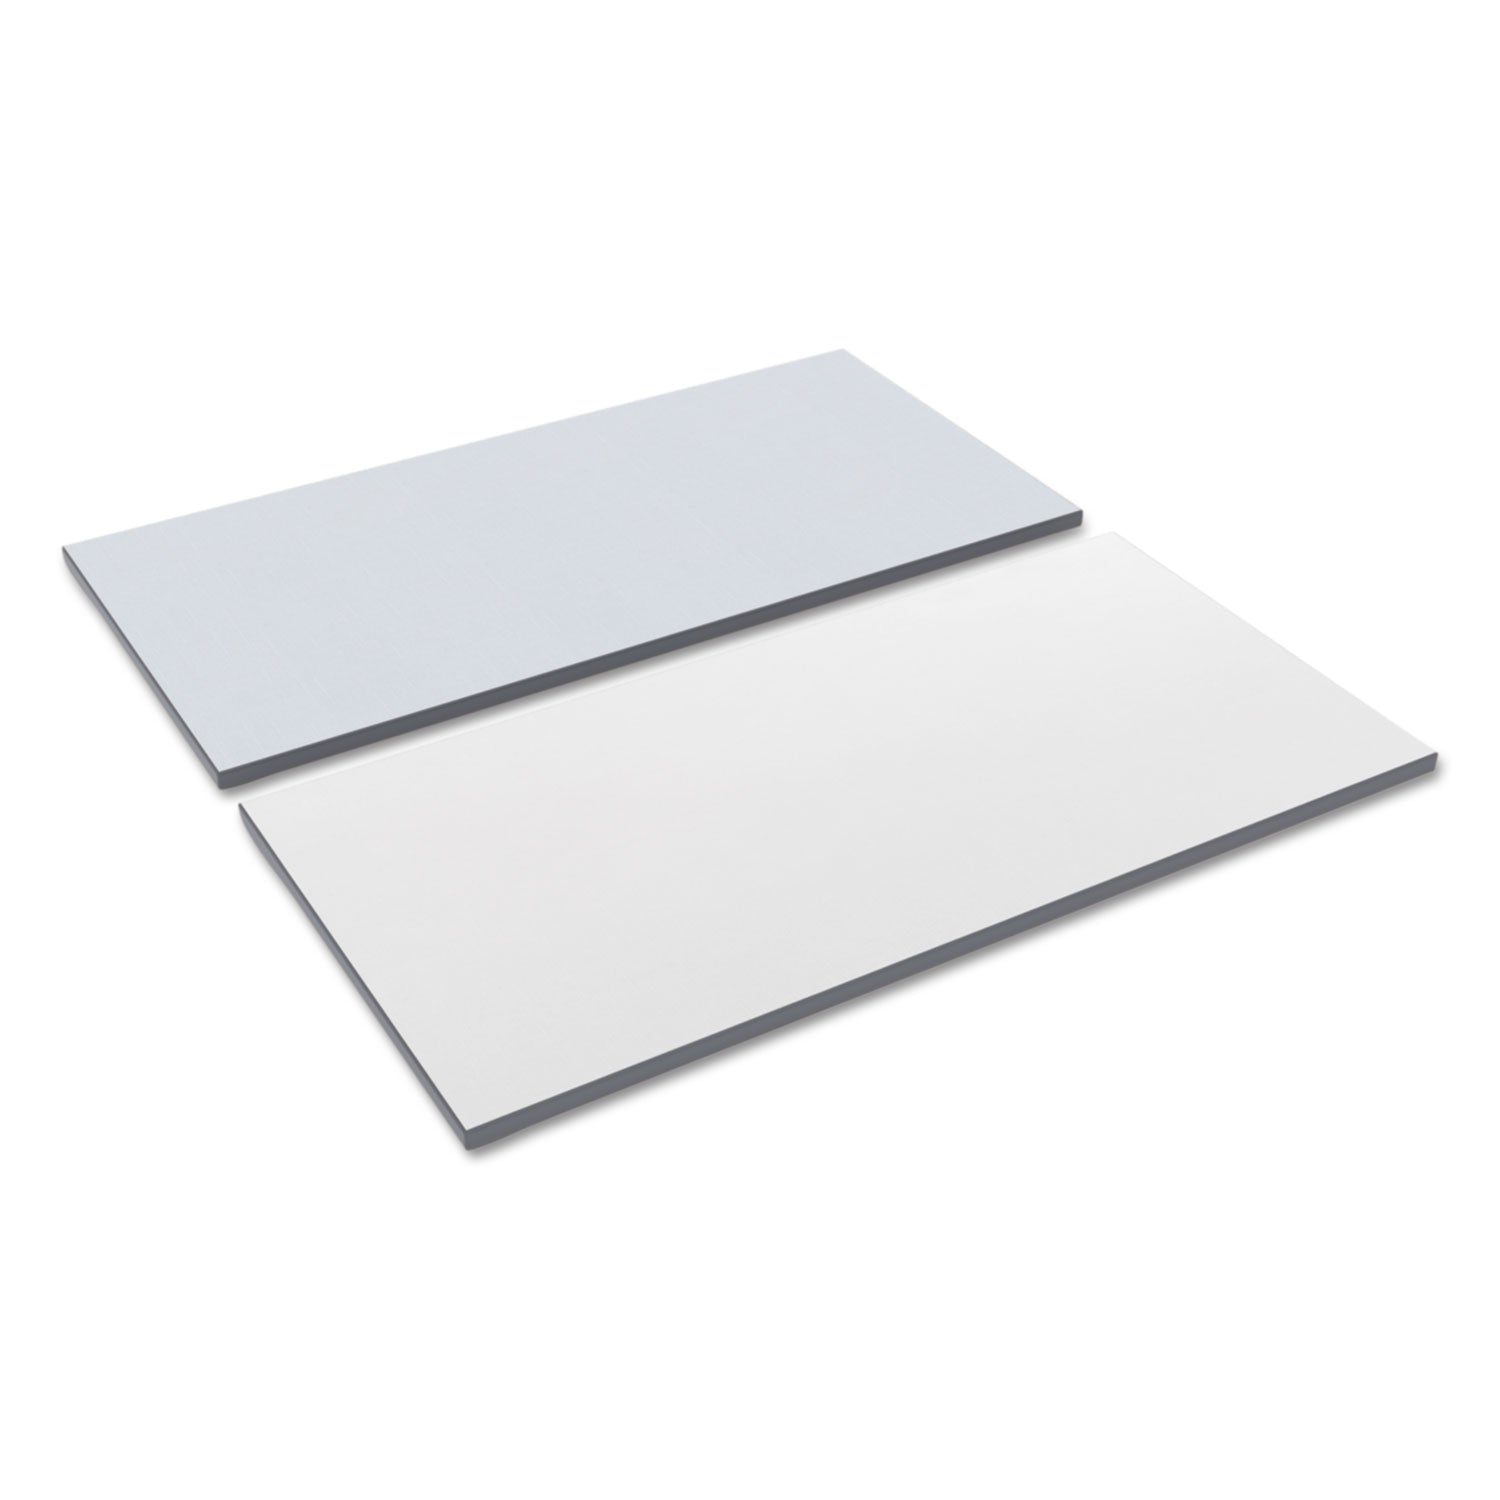 reversible-laminate-table-top-rectangular-5938w-x-2363d-white-gray_alett6024wg - 1